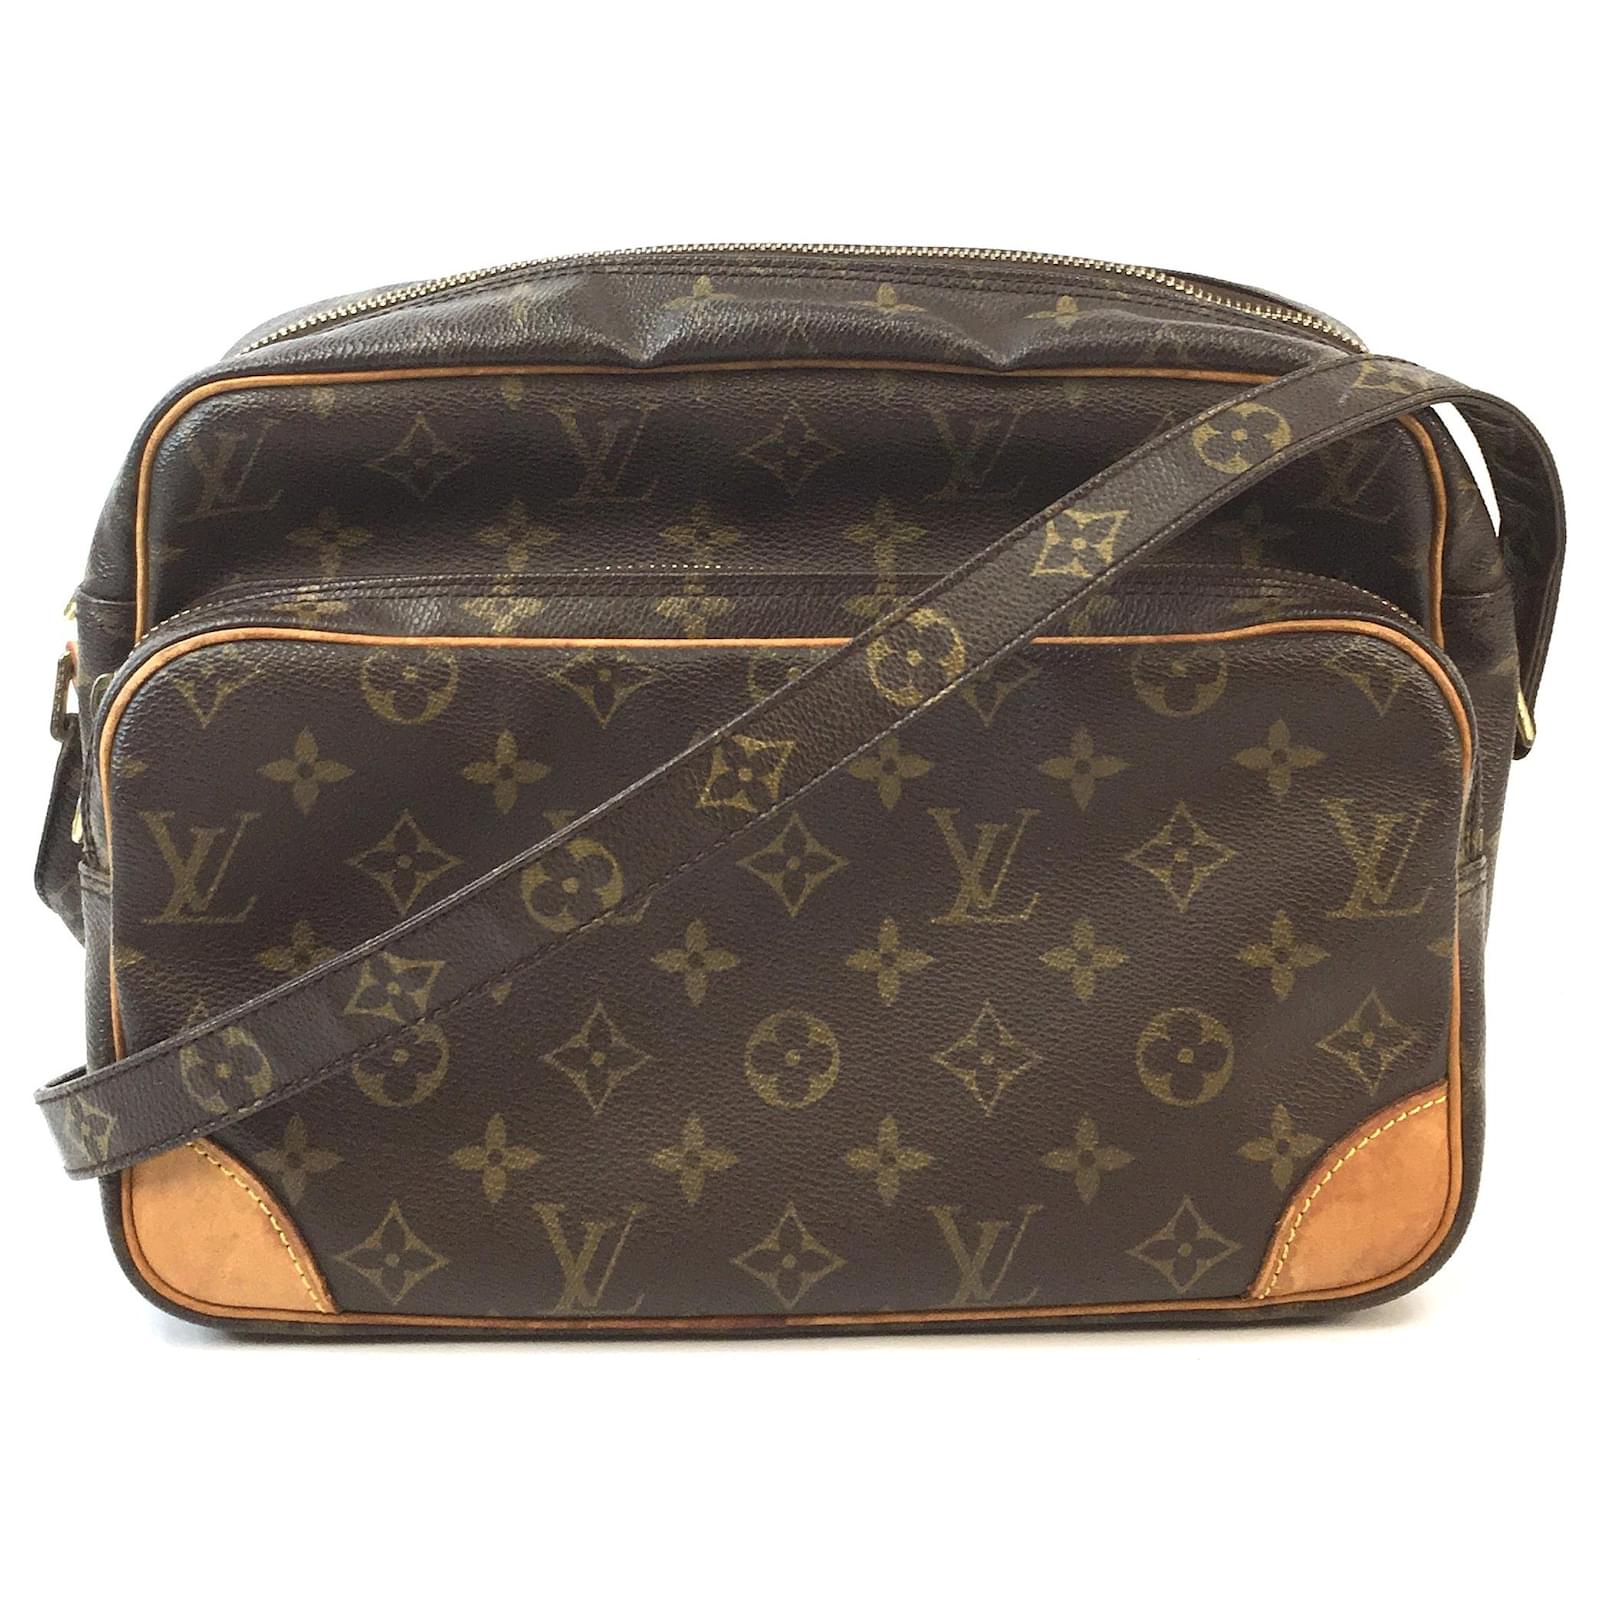 Louis Vuitton NIL 28 Handbags